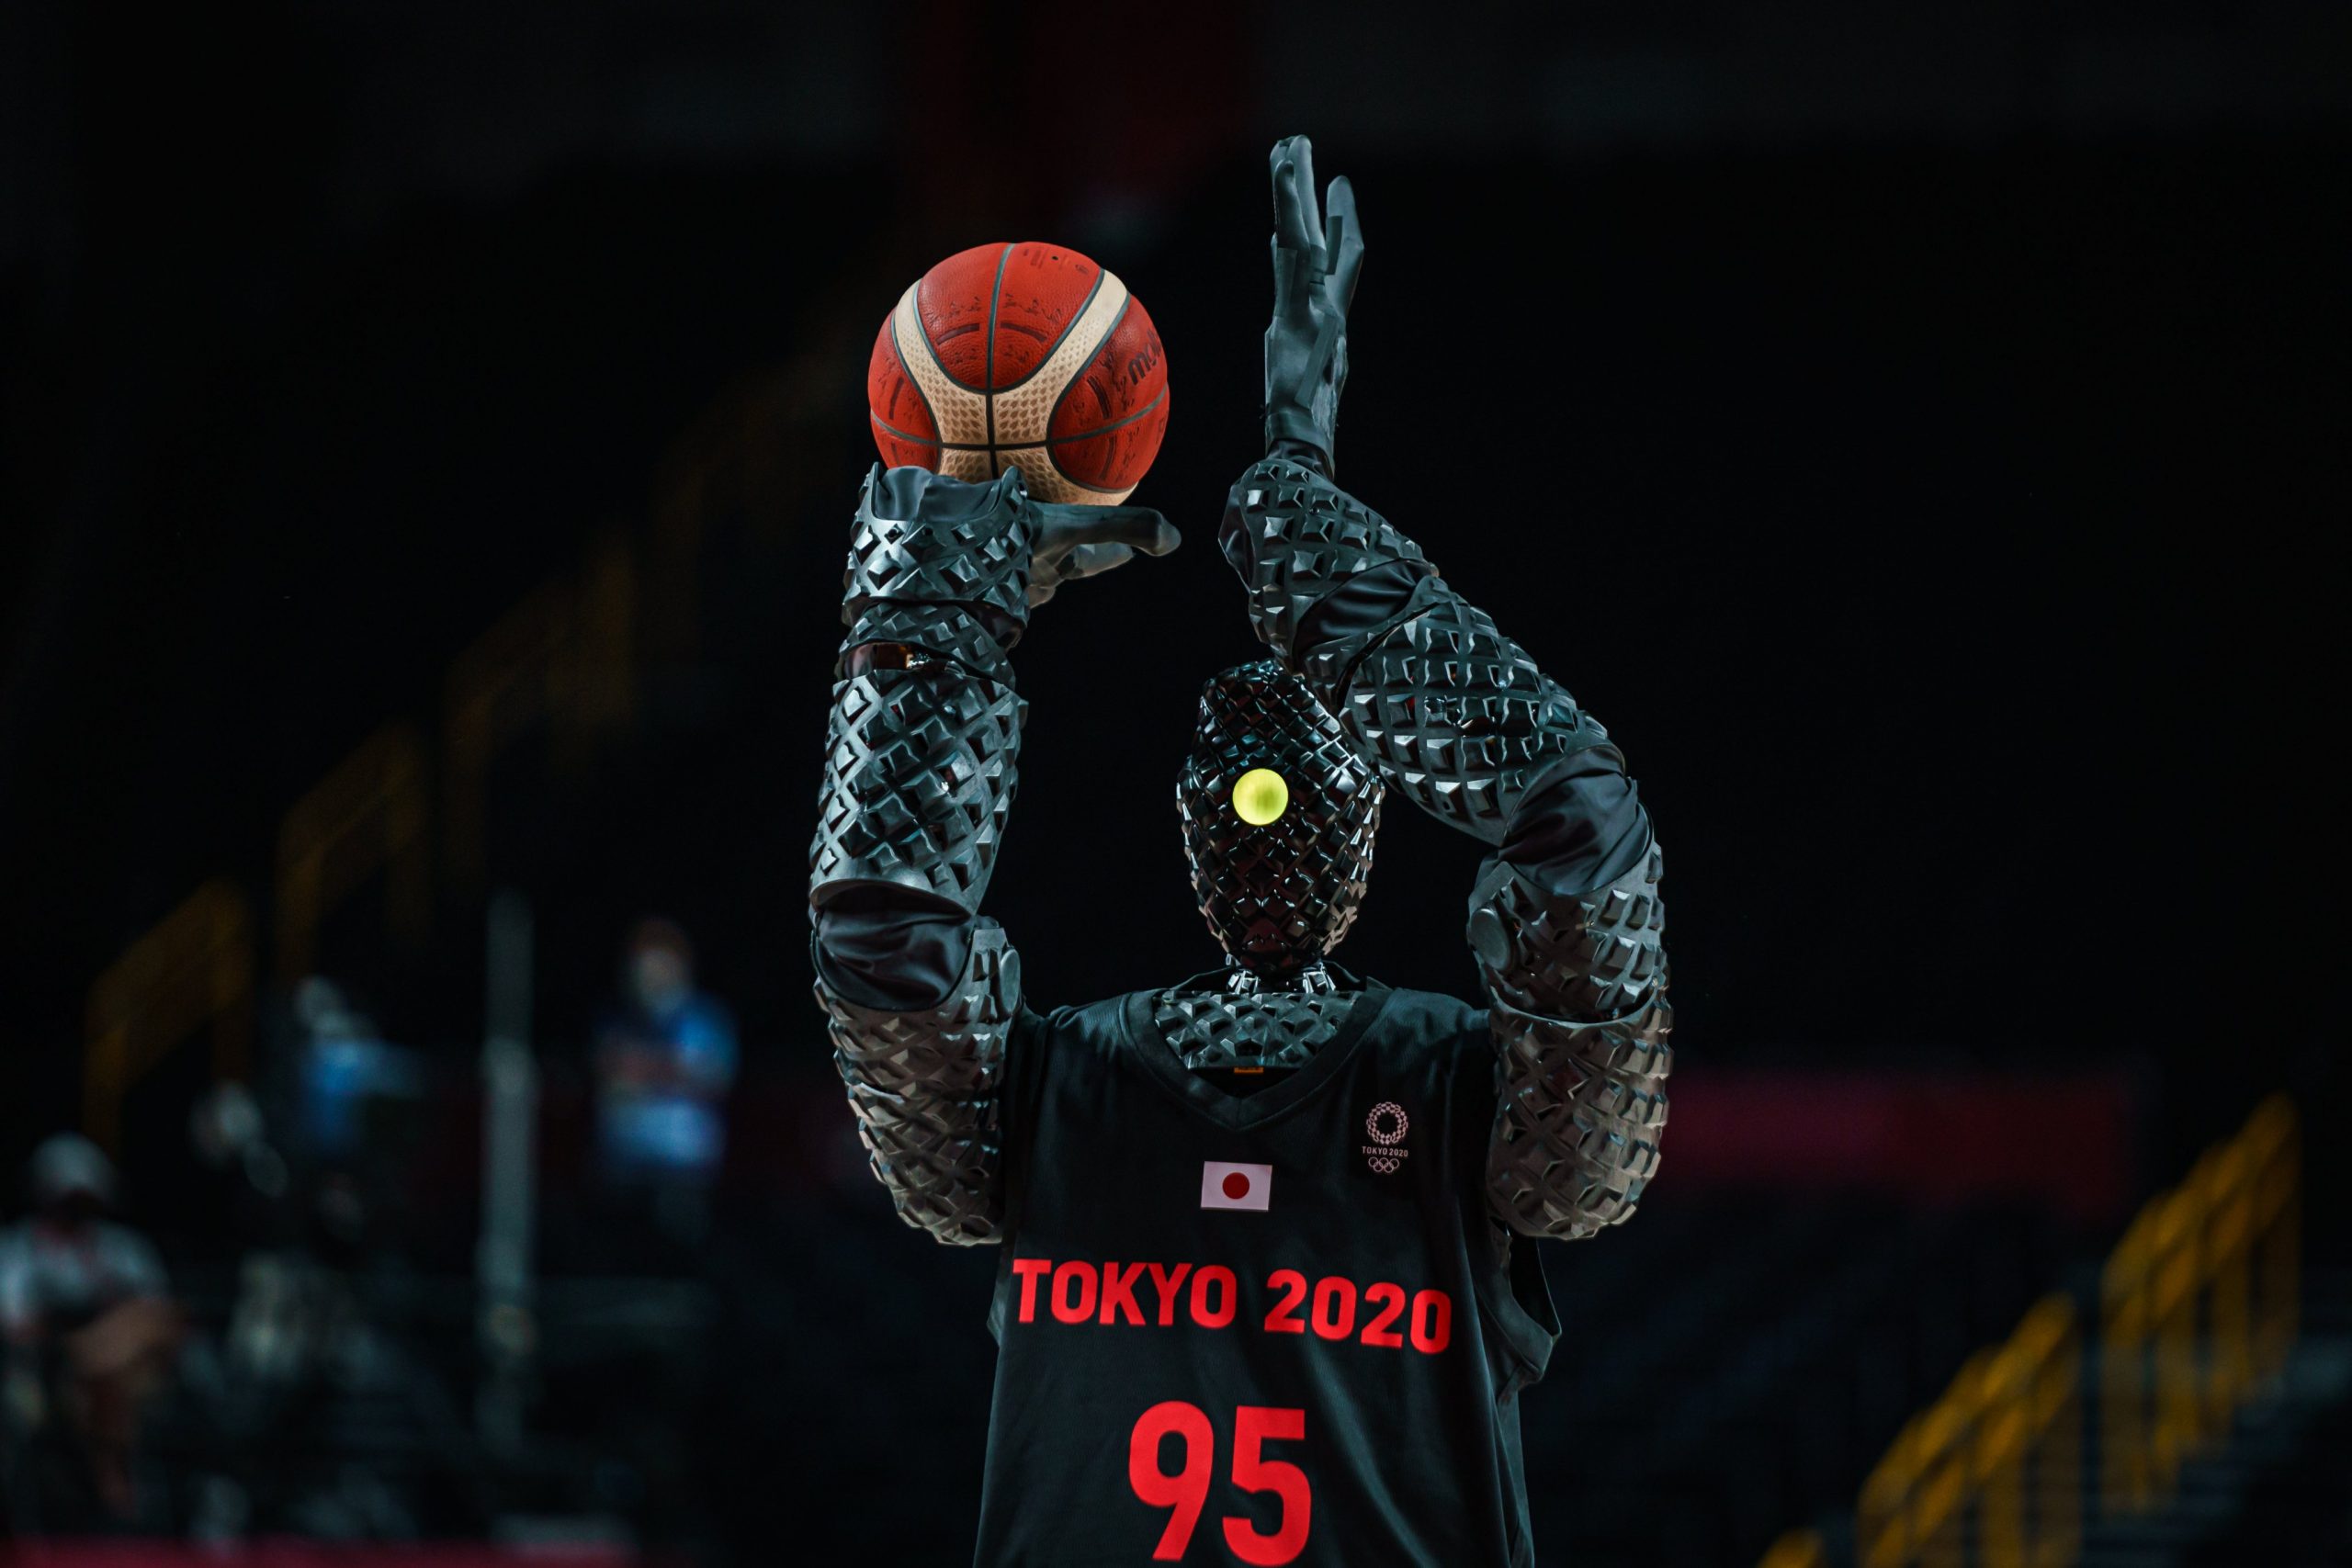 Робот-баскетболист забросил в корзину три мяча на Олимпийских играх в Токио